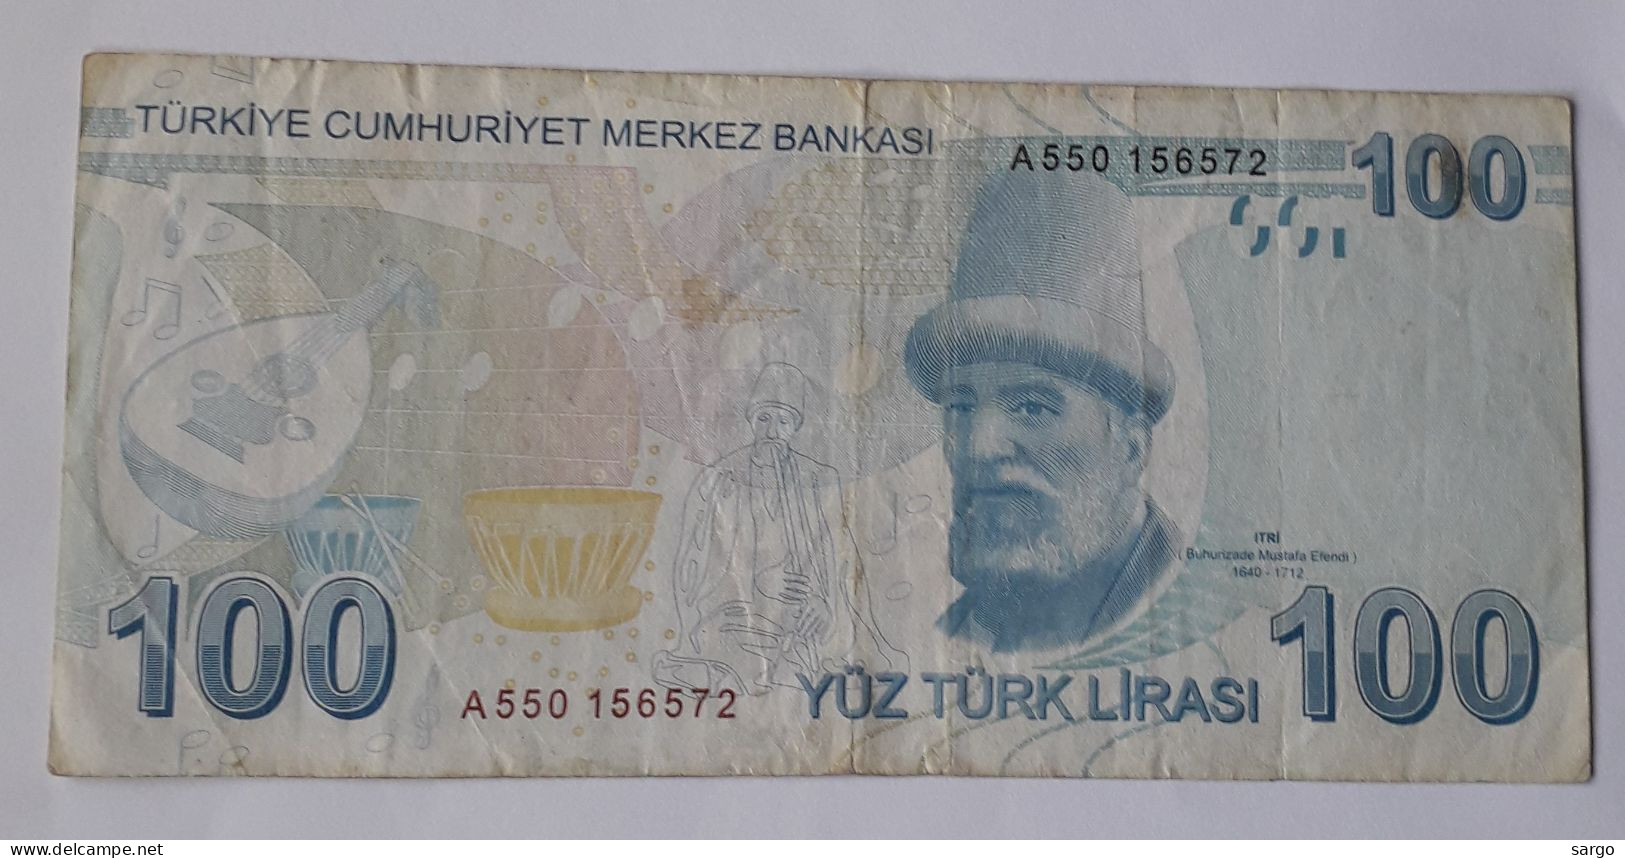 TURKEY - 100 LIRA -  P 226 - 2009/2022 - CIRC - BANKNOTES - PAPER MONEY - CARTAMONETA - - Turkey